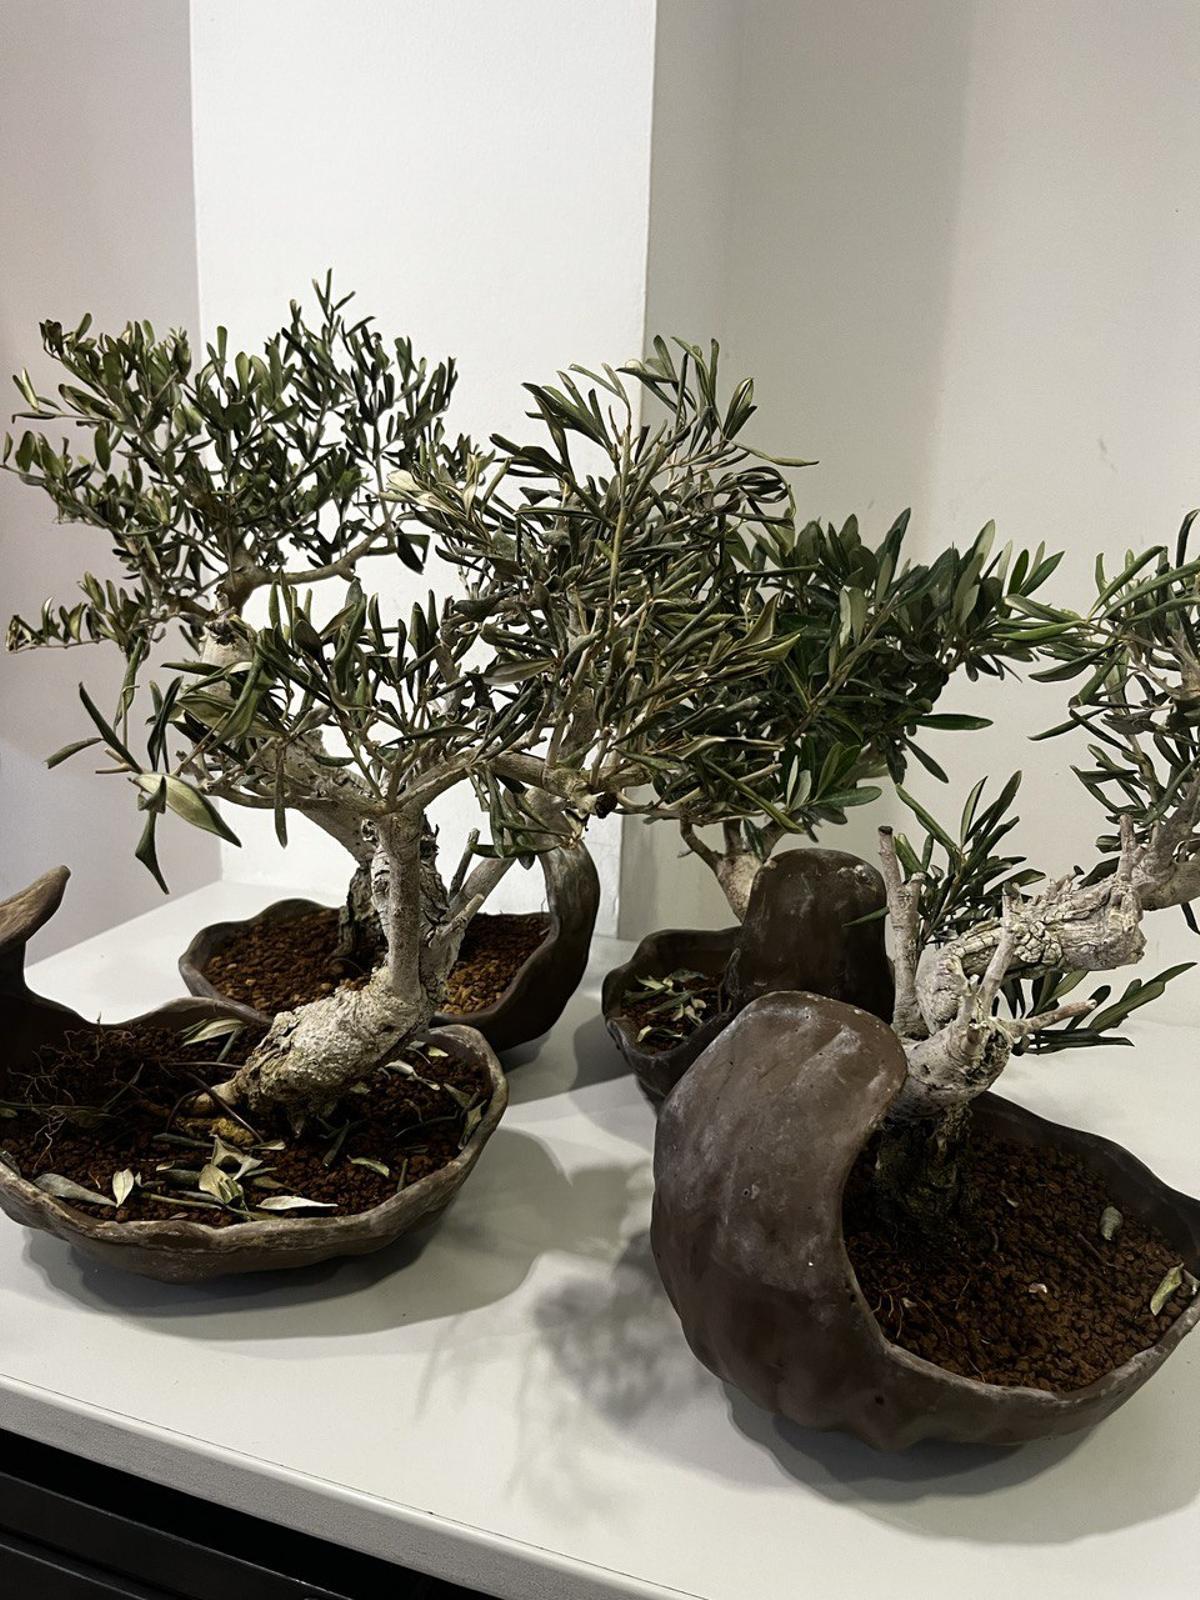 Els bonsais robats al Celler de Can Roca de Girona